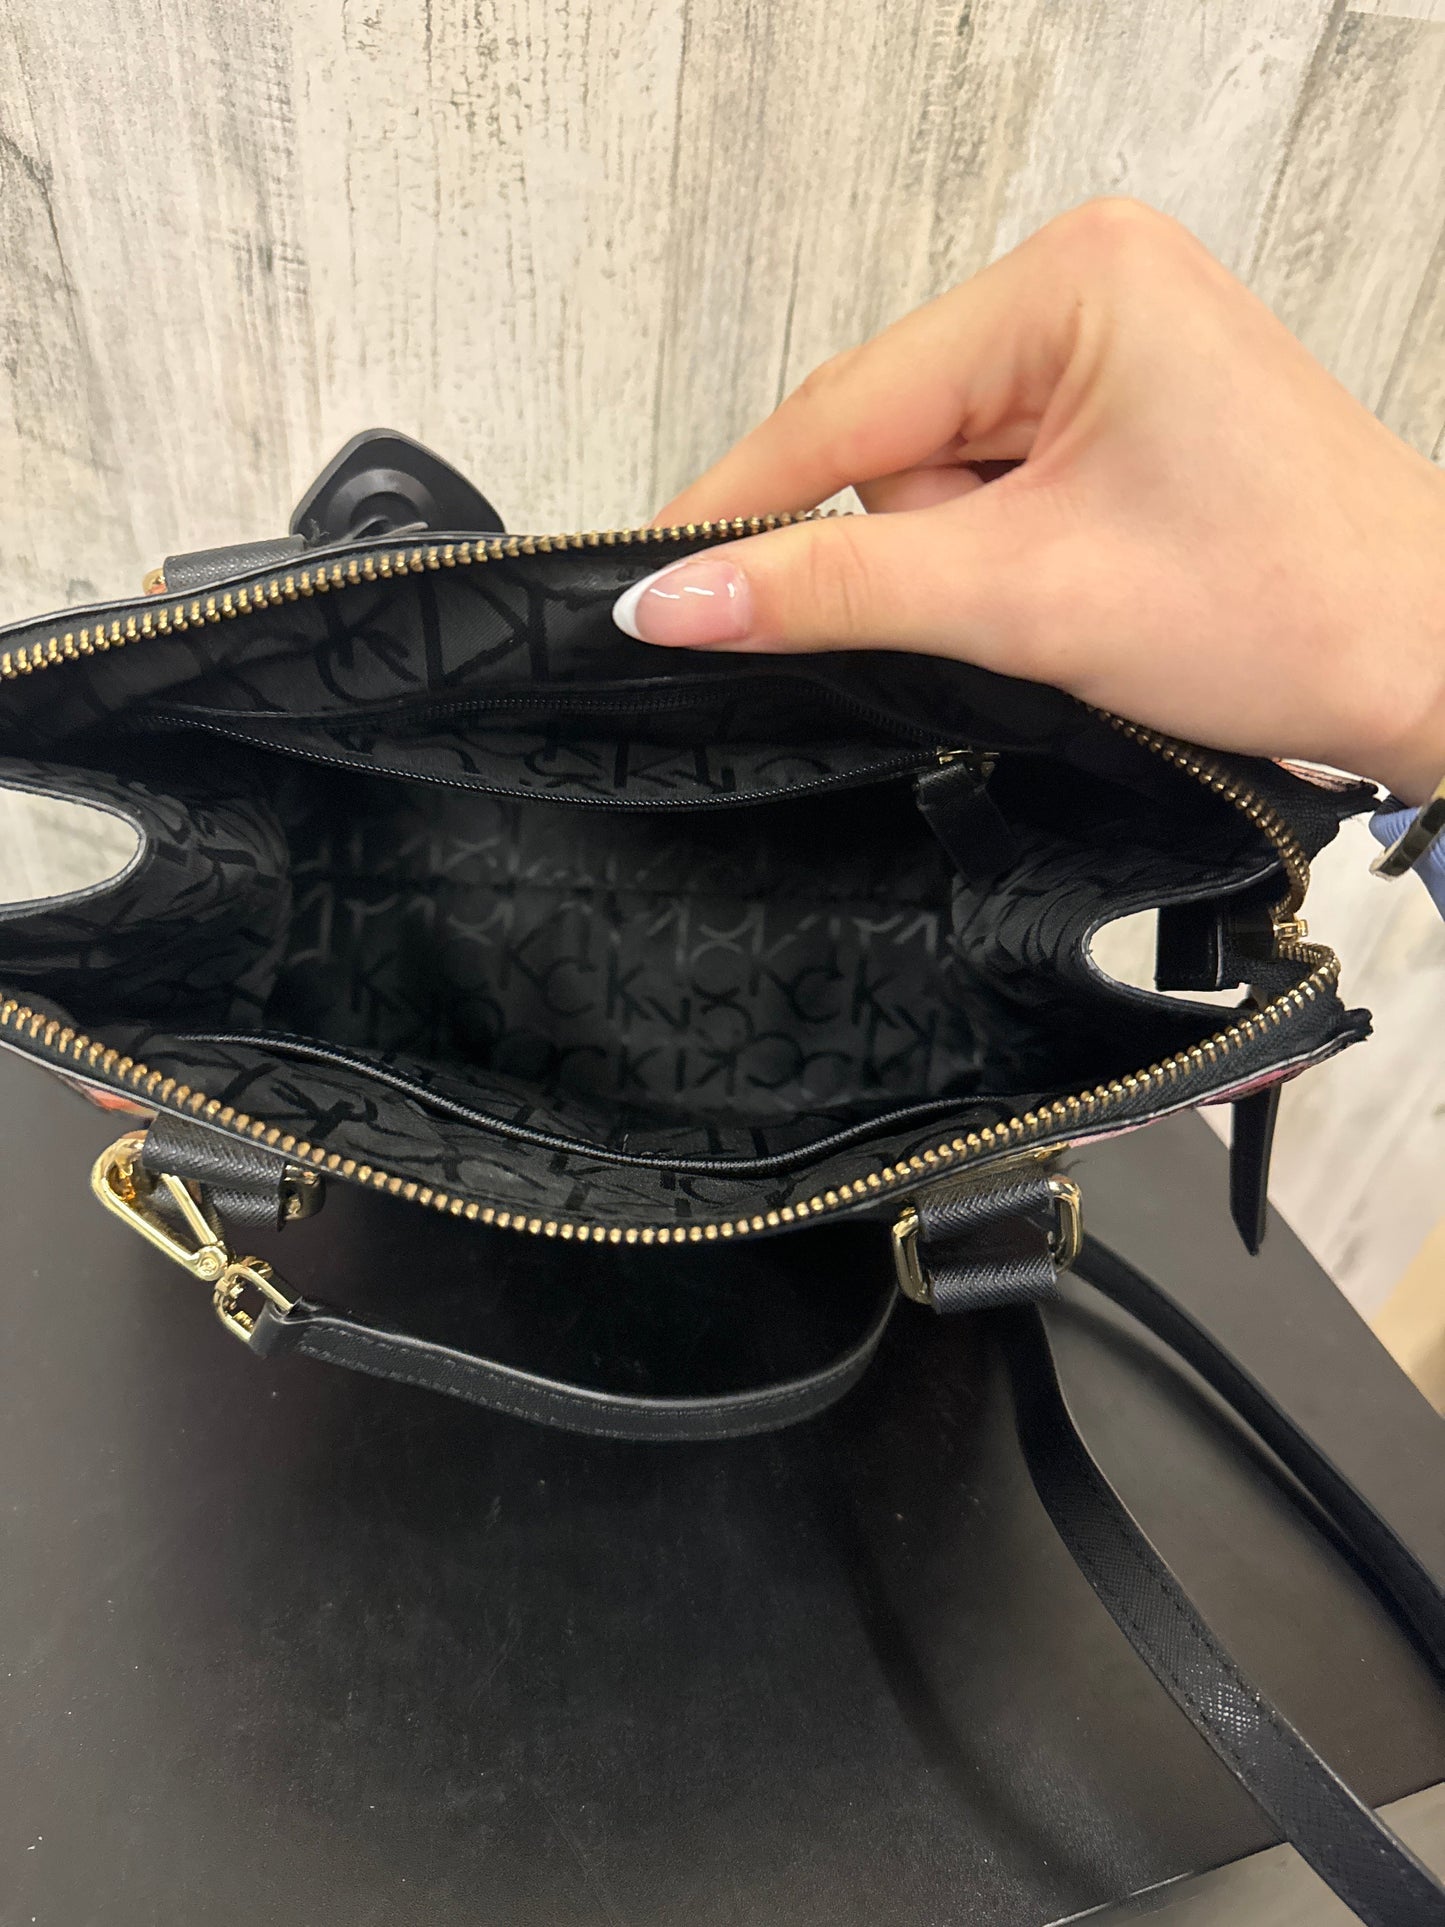 Handbag By Calvin Klein  Size: Medium